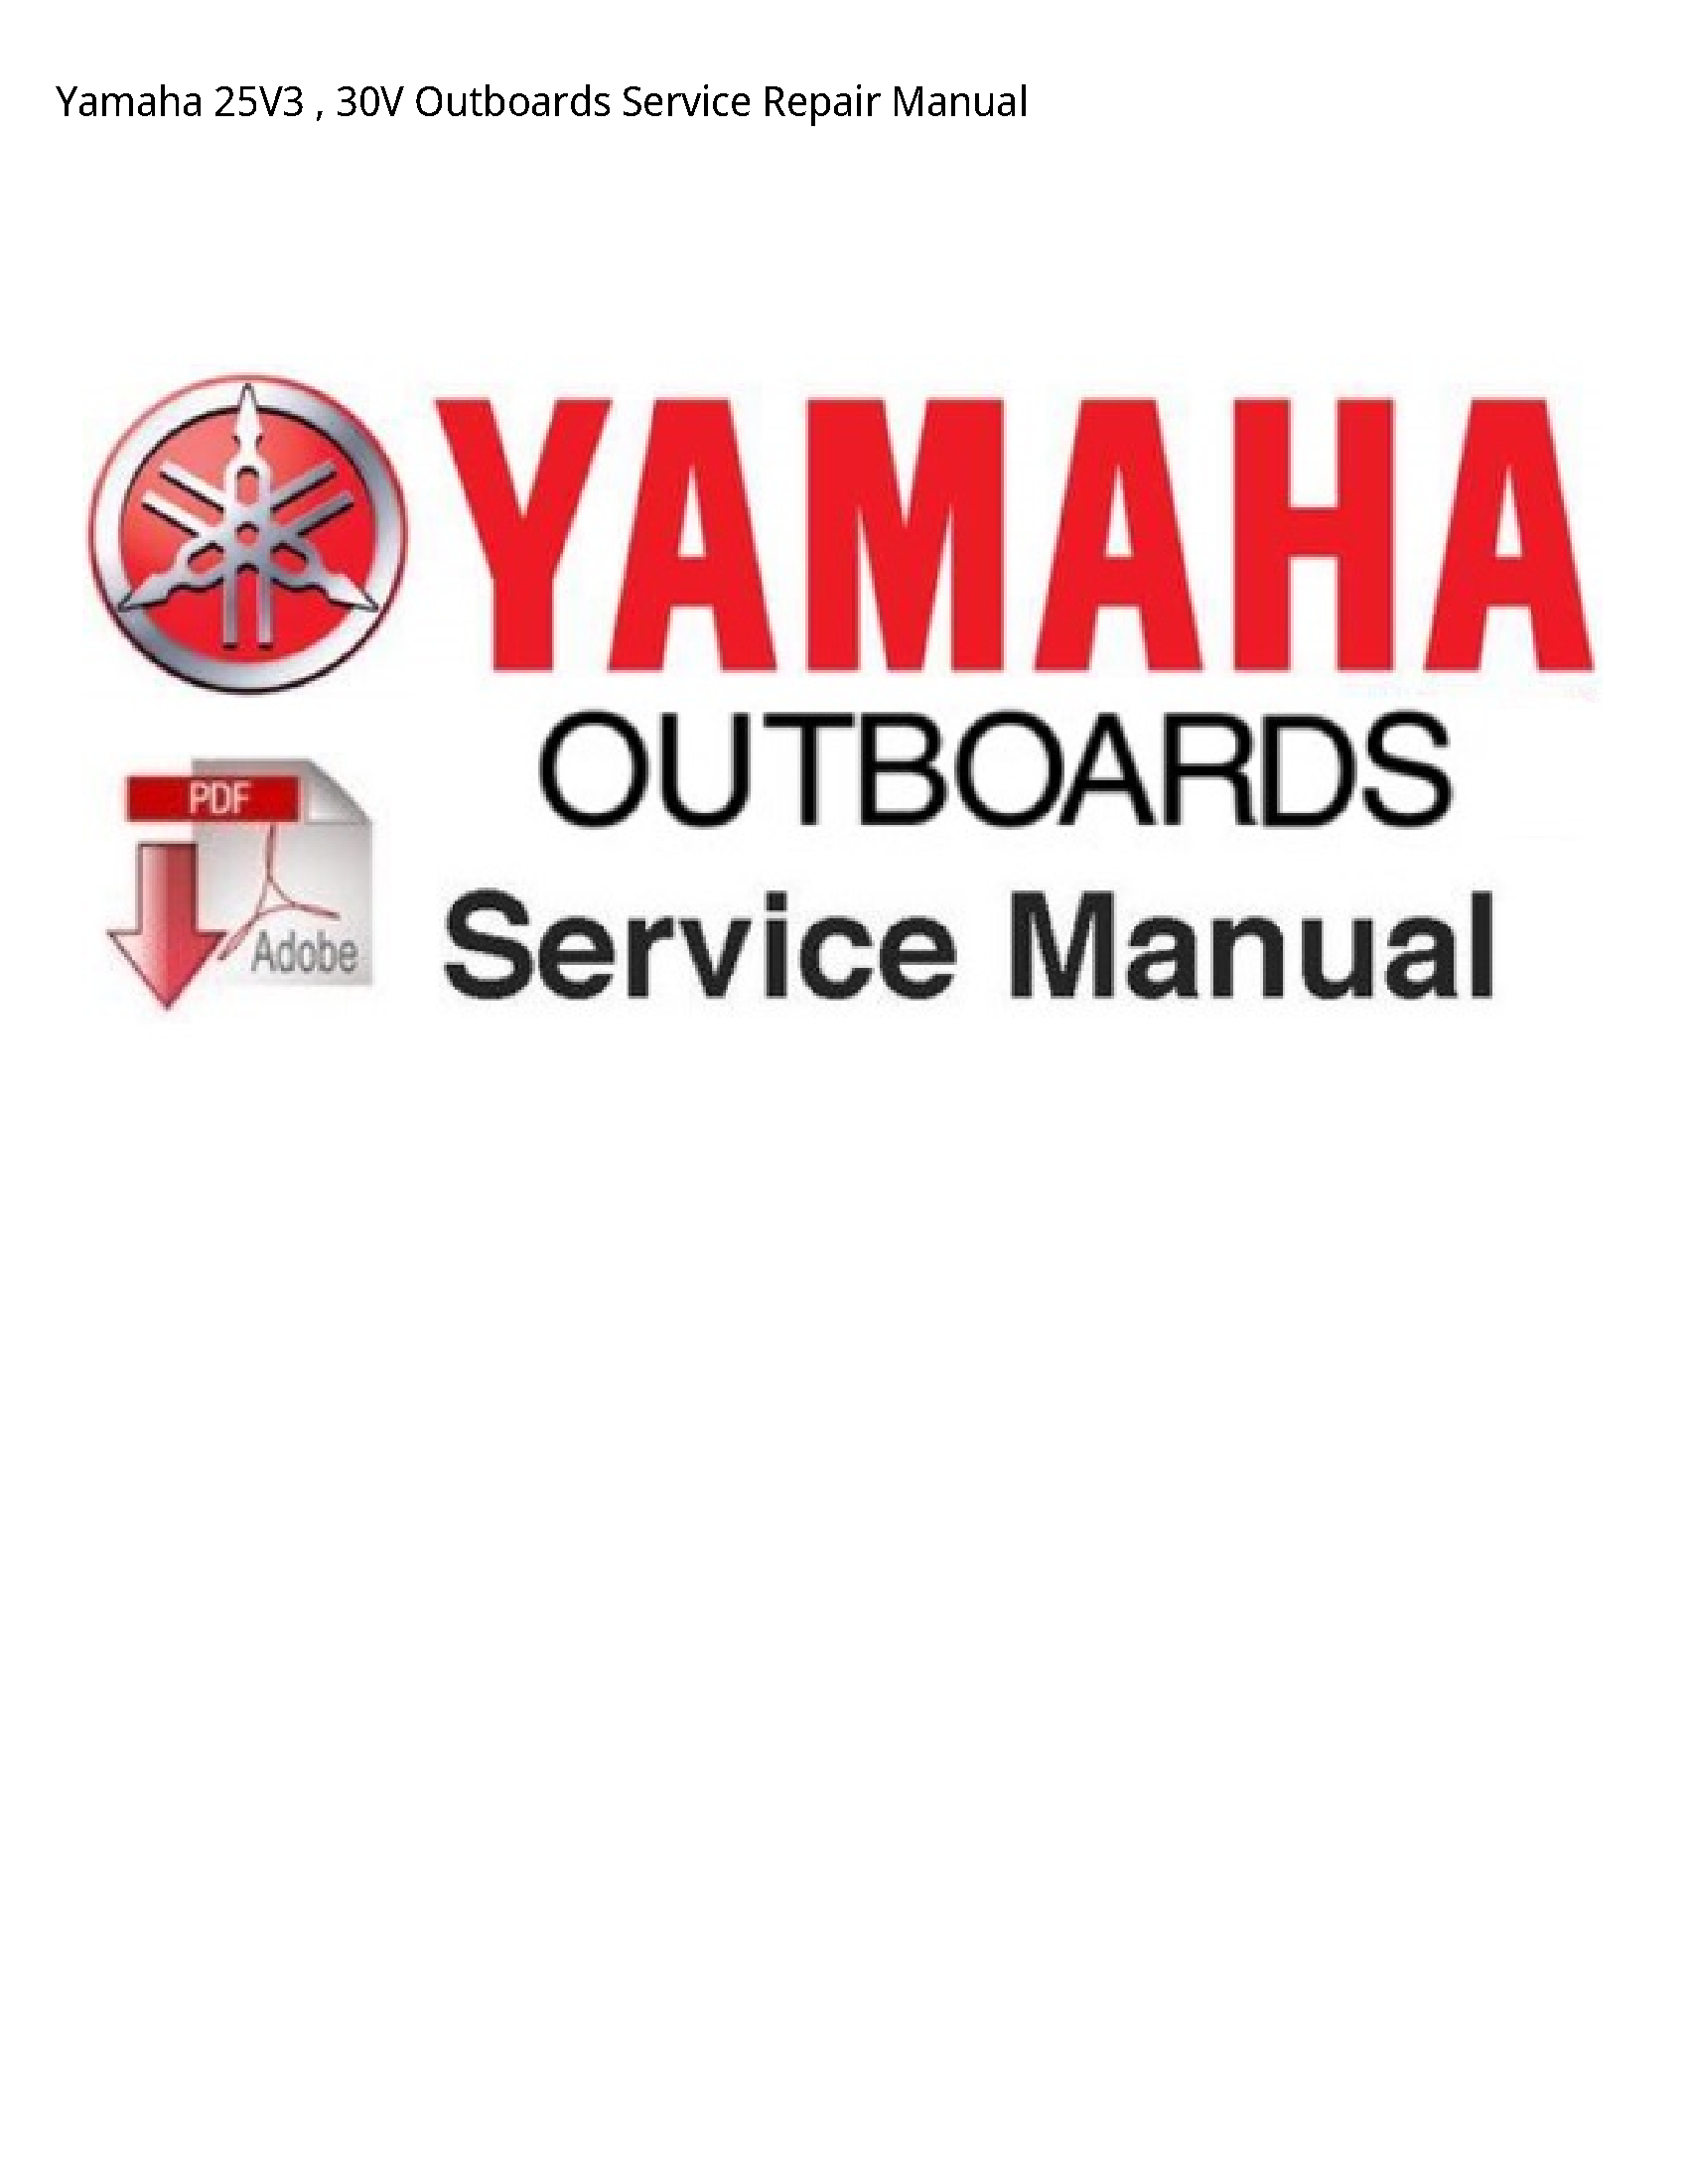 Yamaha 25V3 Outboards manual